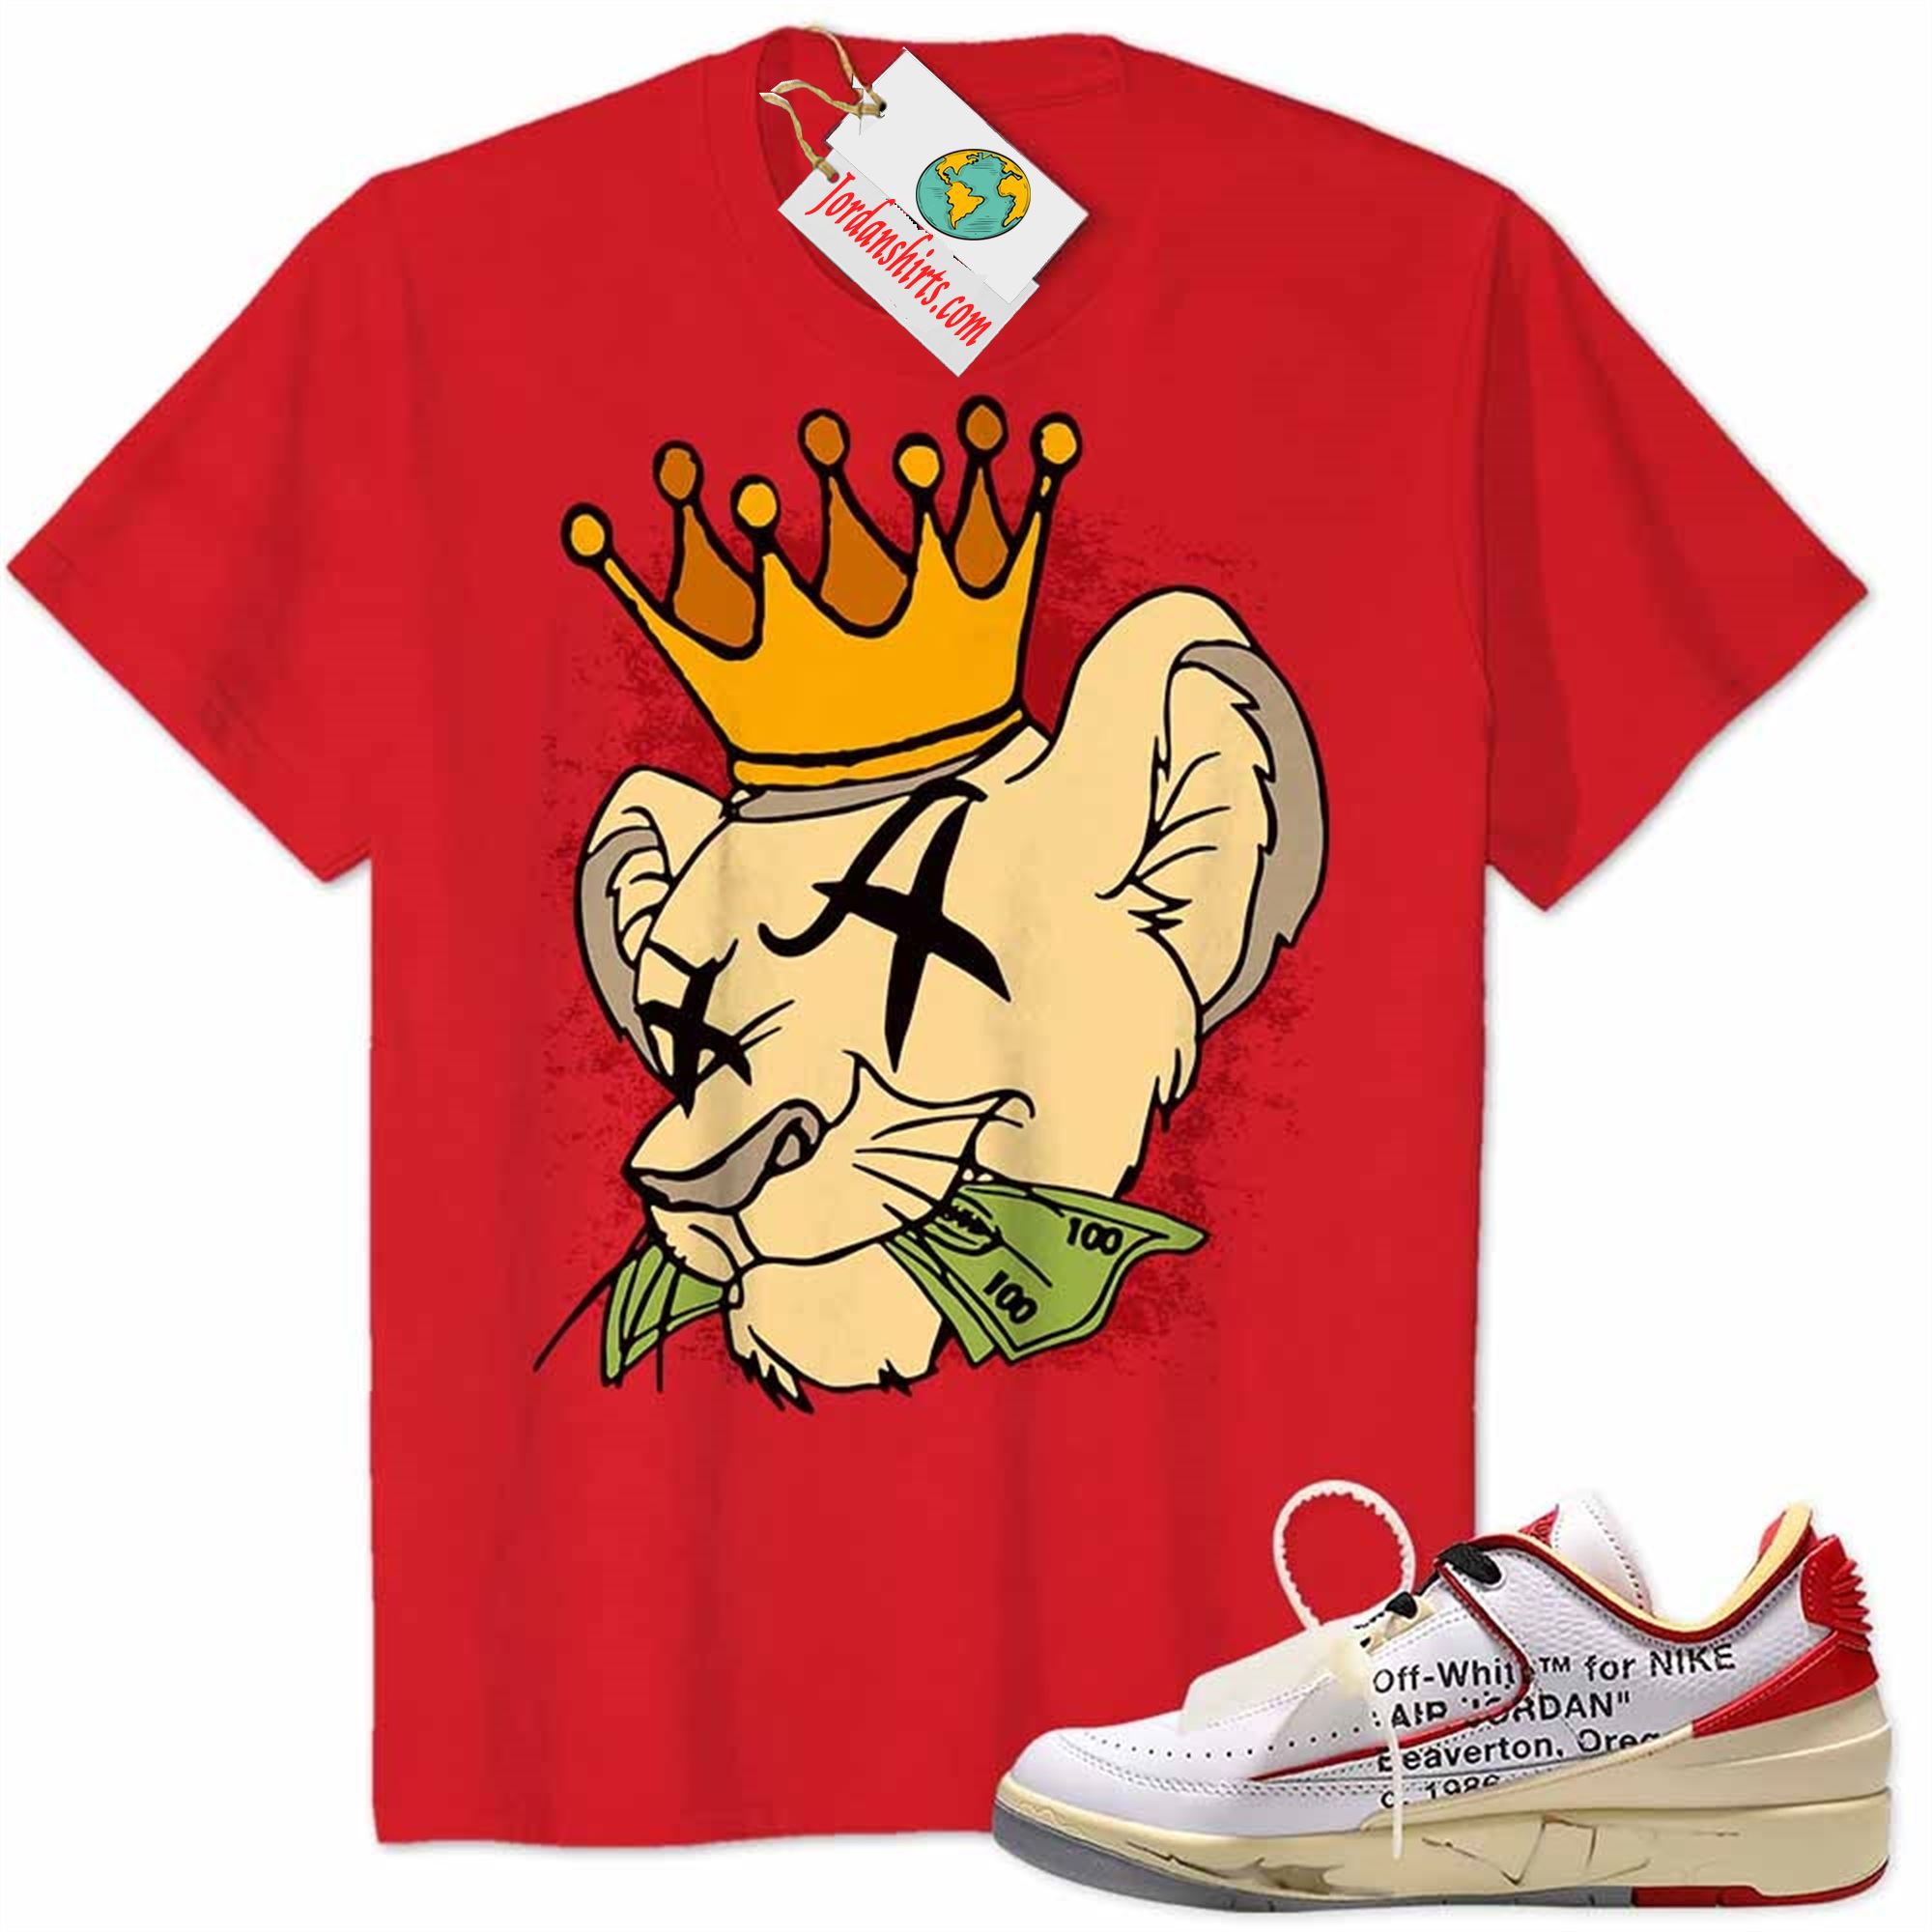 Jordan 2 Shirt, Simba Lion King With Crown Money Red Air Jordan 2 Low White Red Off-white 2s Plus Size Up To 5xl